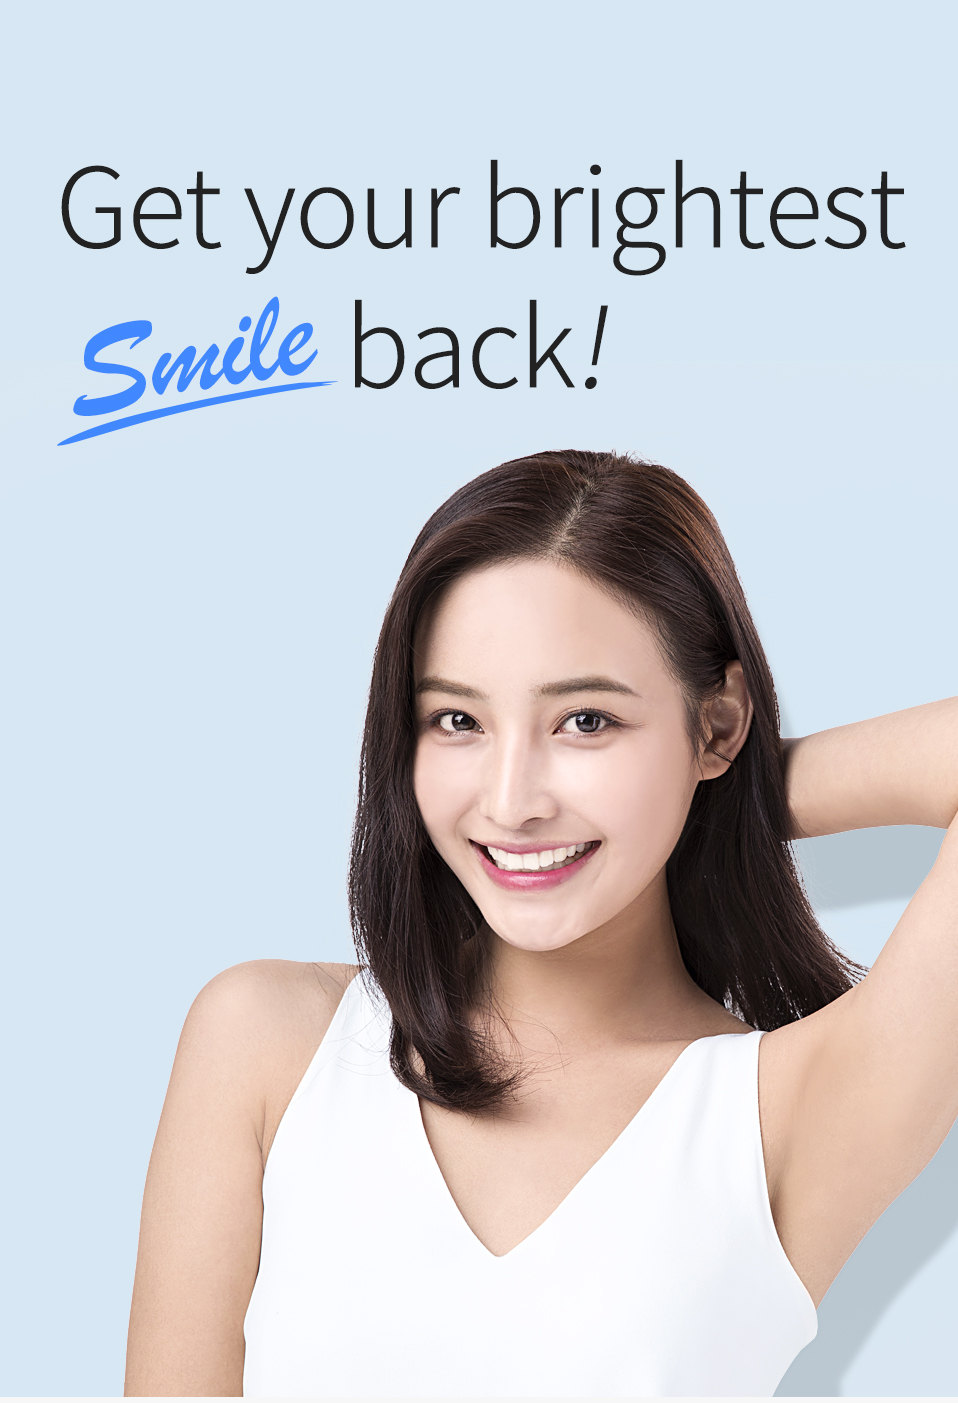 Get your brightest smile back!